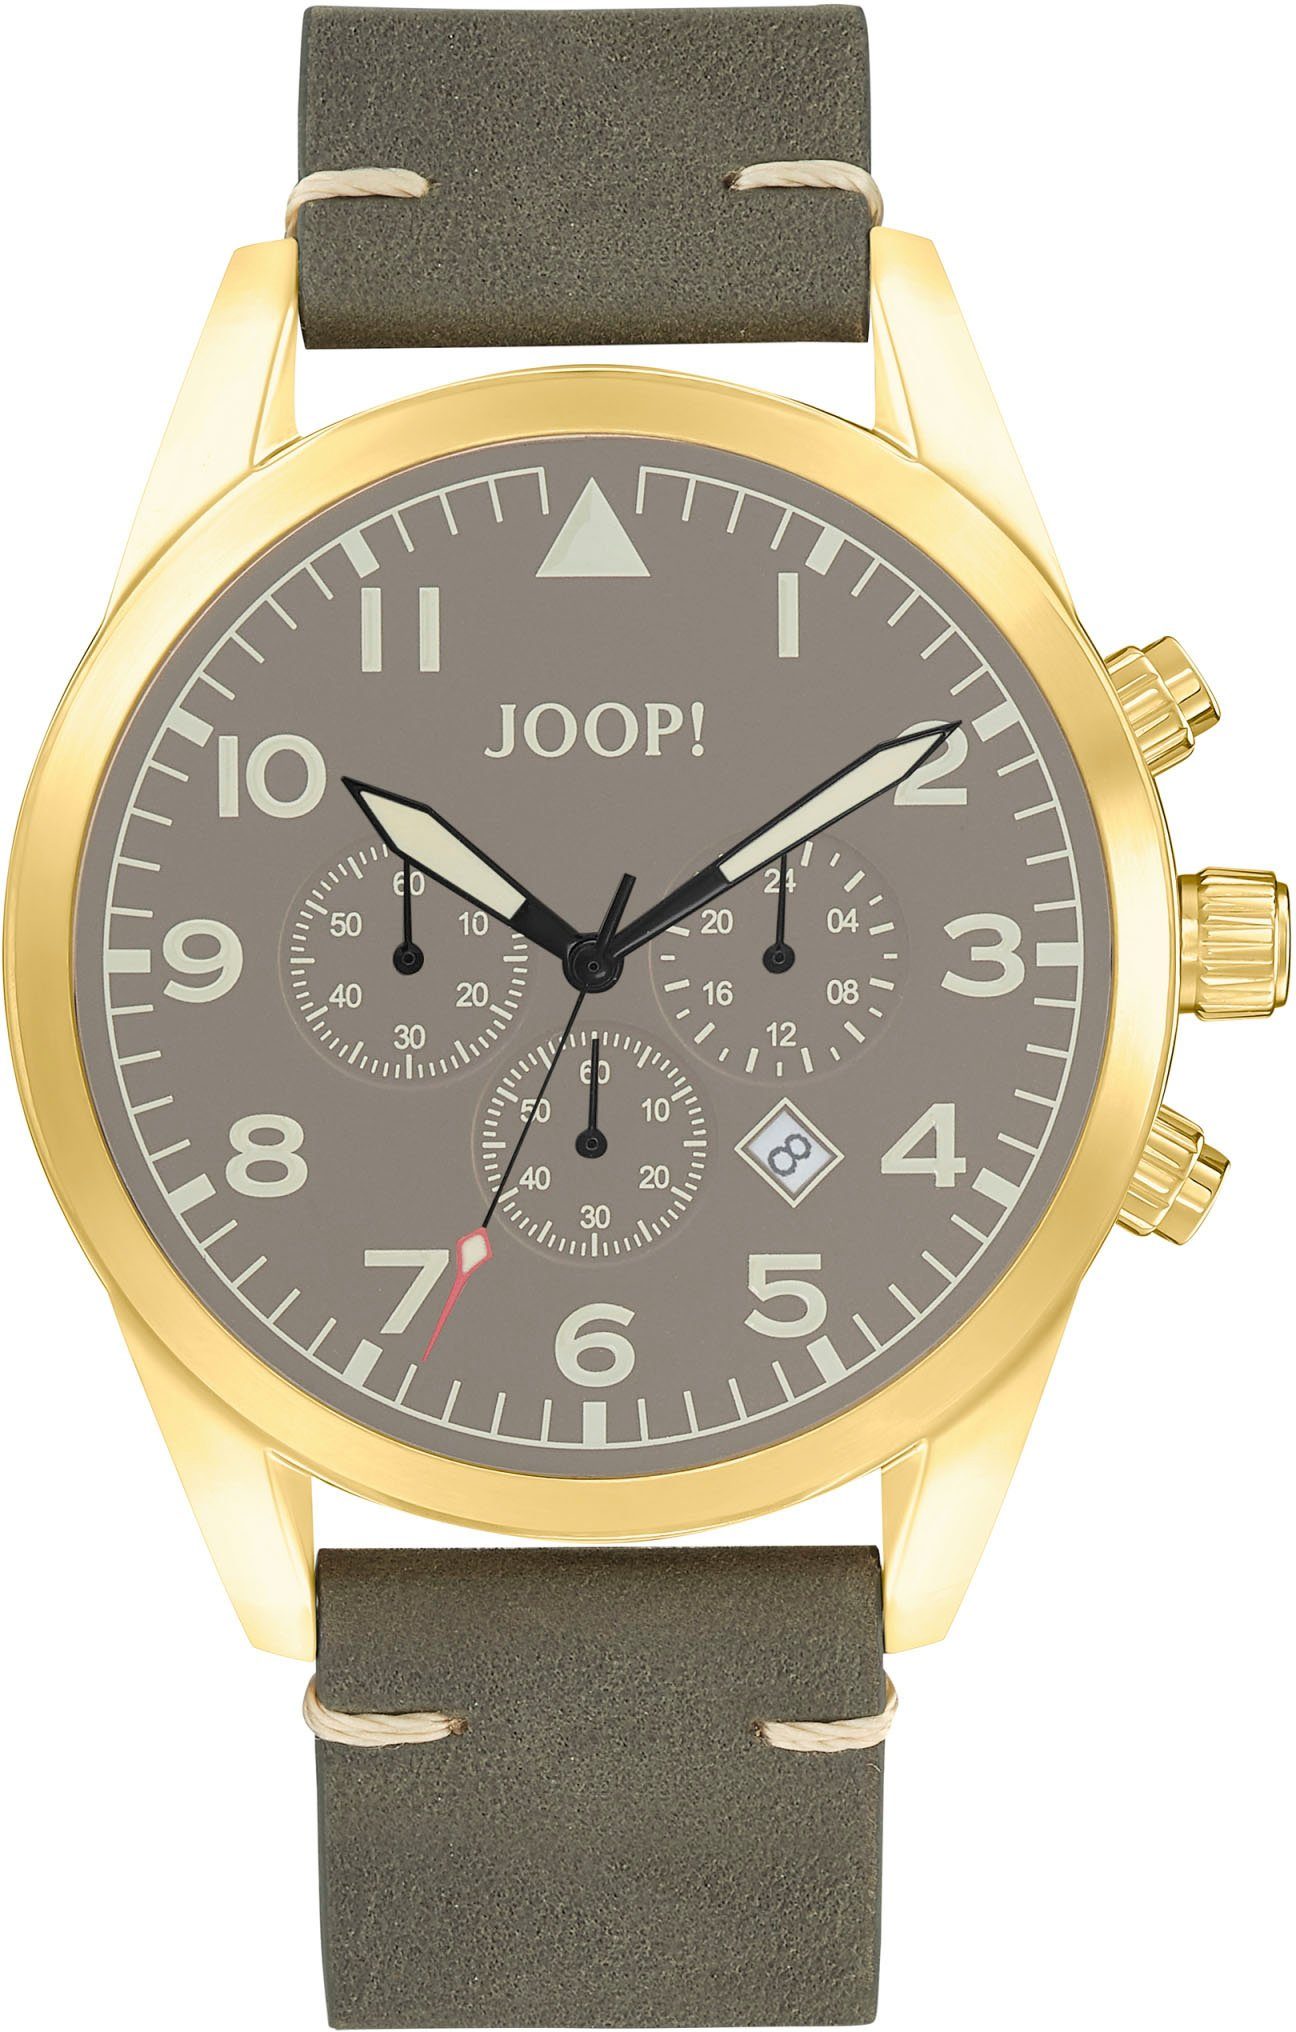 JOOP! Chronograph 2036615, Armbanduhr, Quarzuhr, Herrenuhr, Stoppfunktion